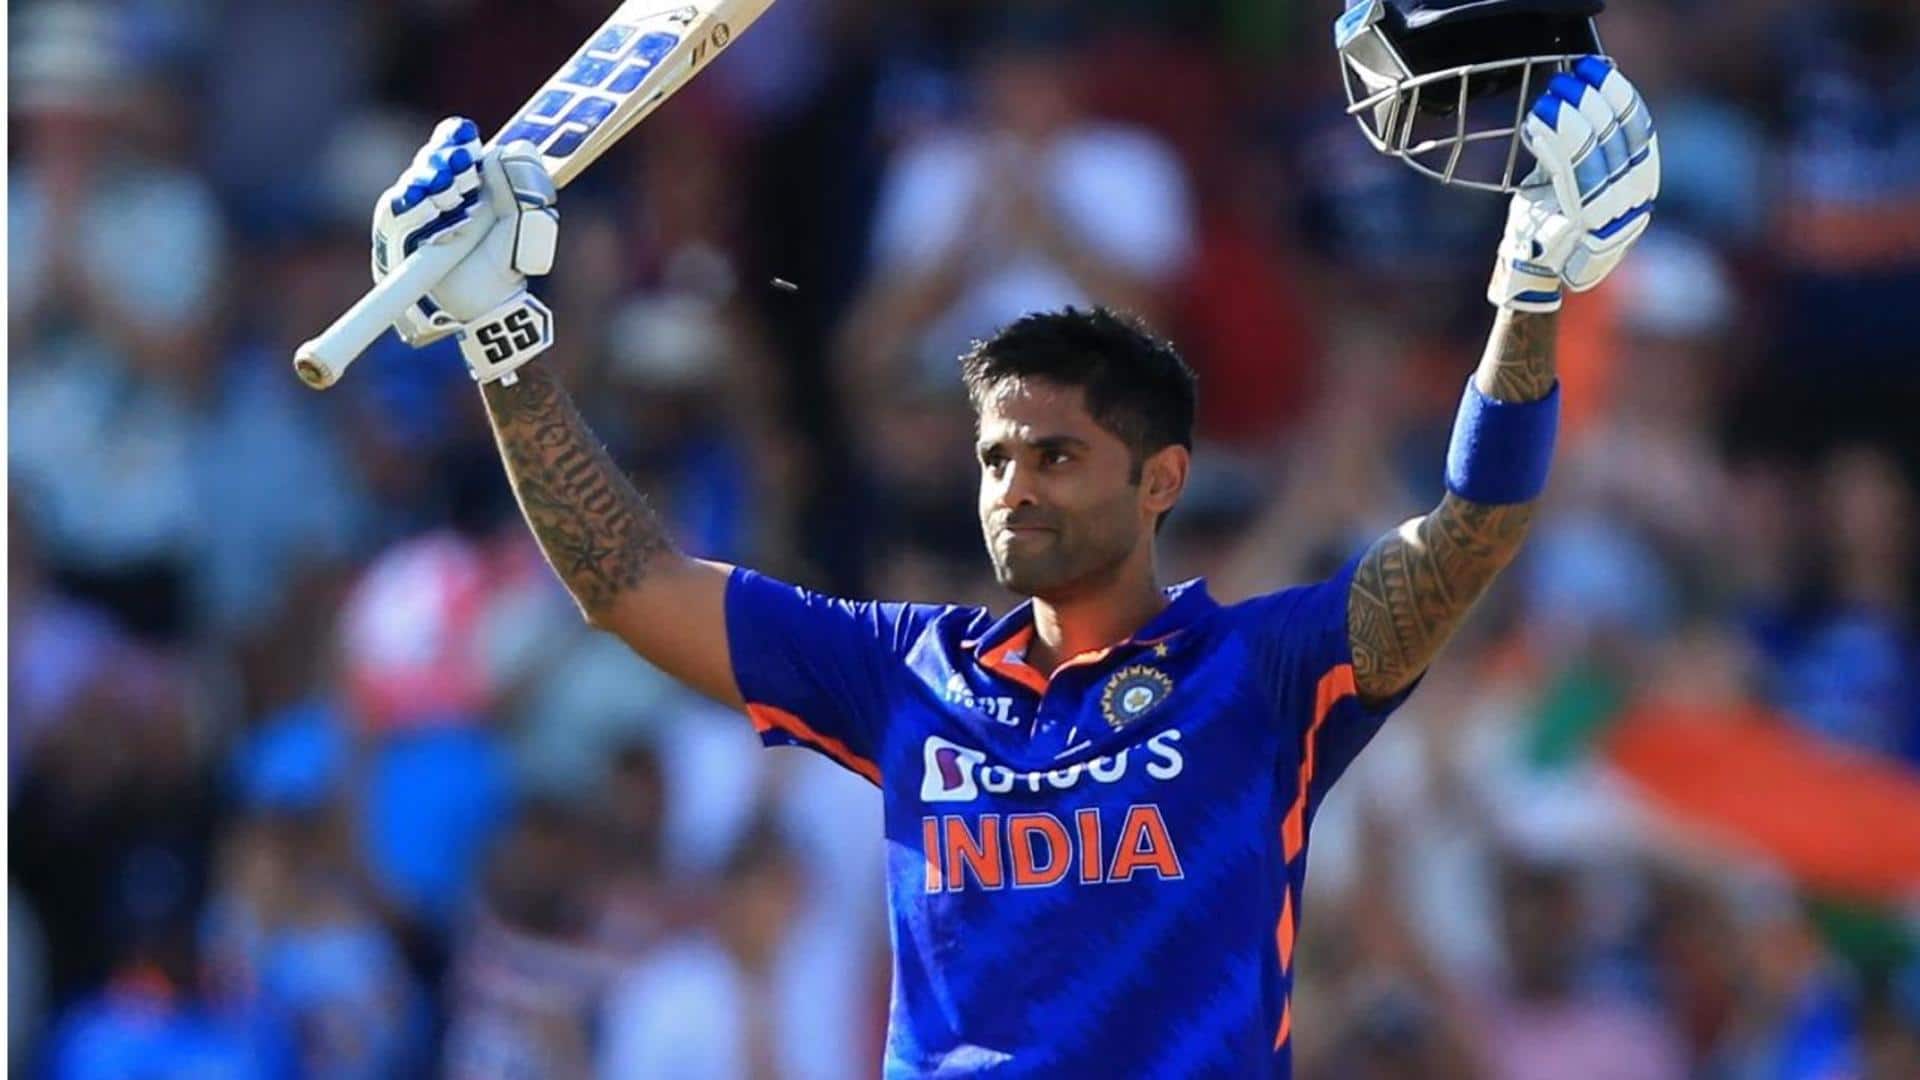 New Zealand vs India 1st ODI: Key player battles